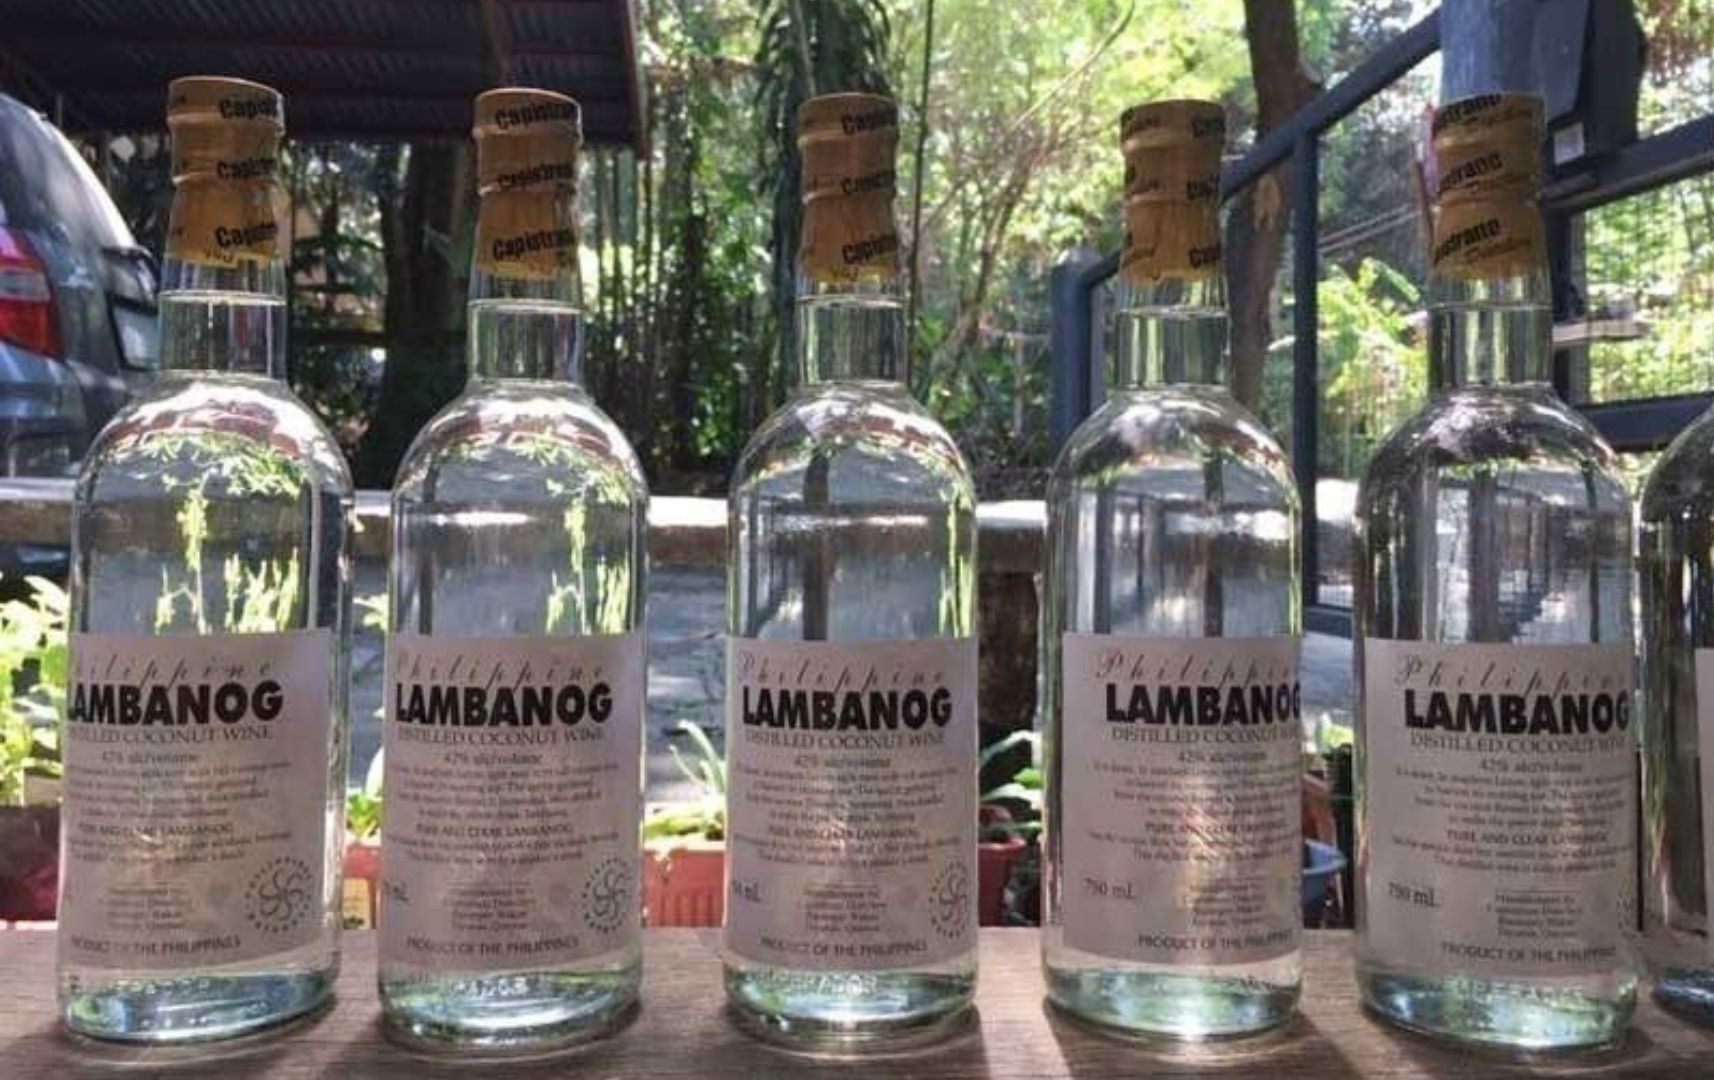 Tara shot! Lambanog in Top 10 of best spirits globally â TasteAtlas